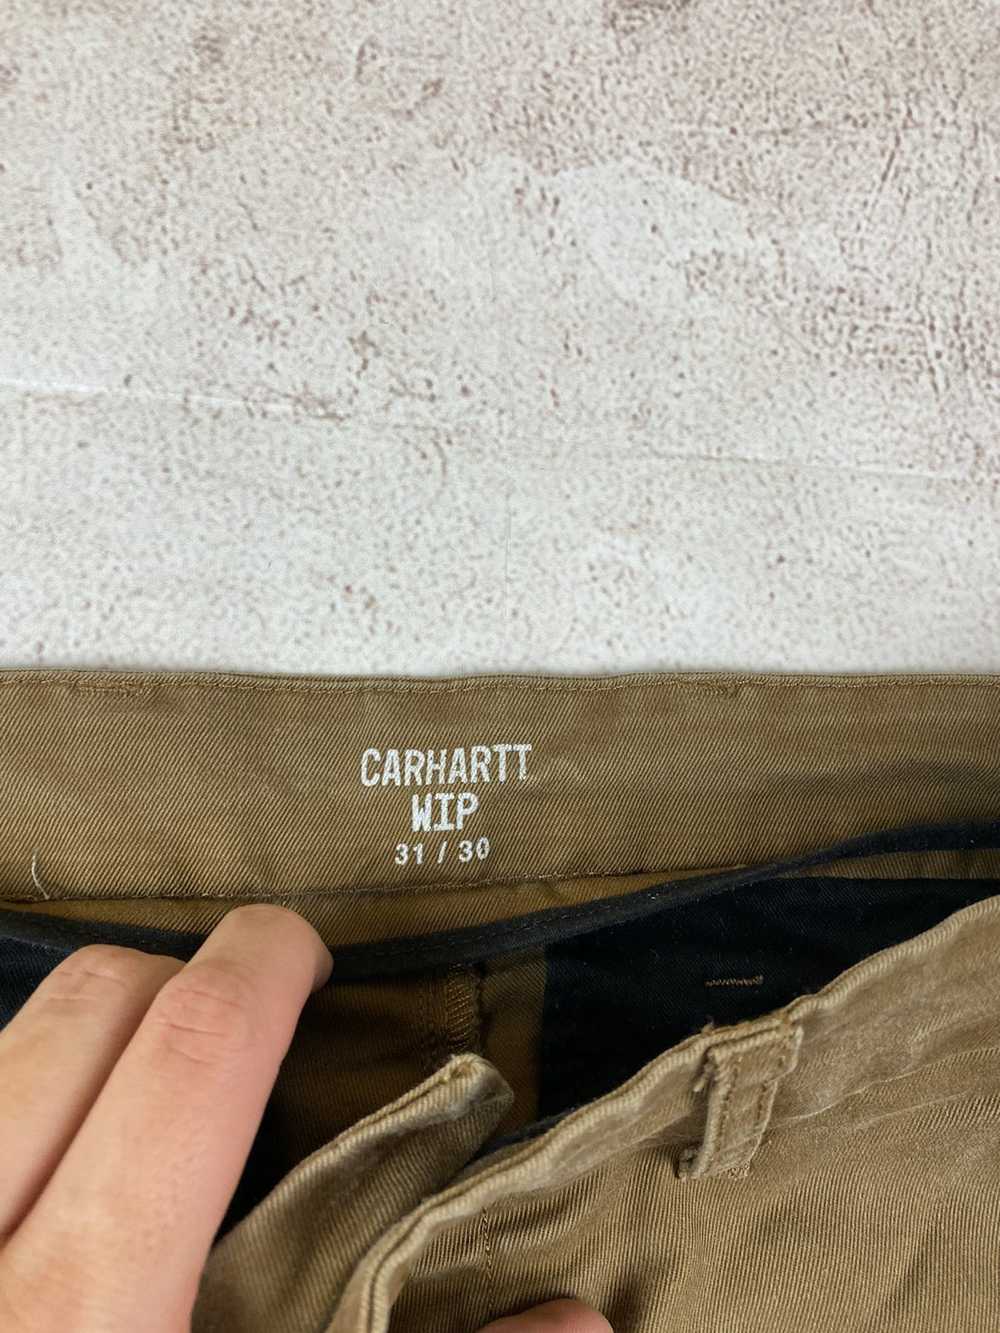 Carhartt Wip Carhartt WIP Pants - image 5